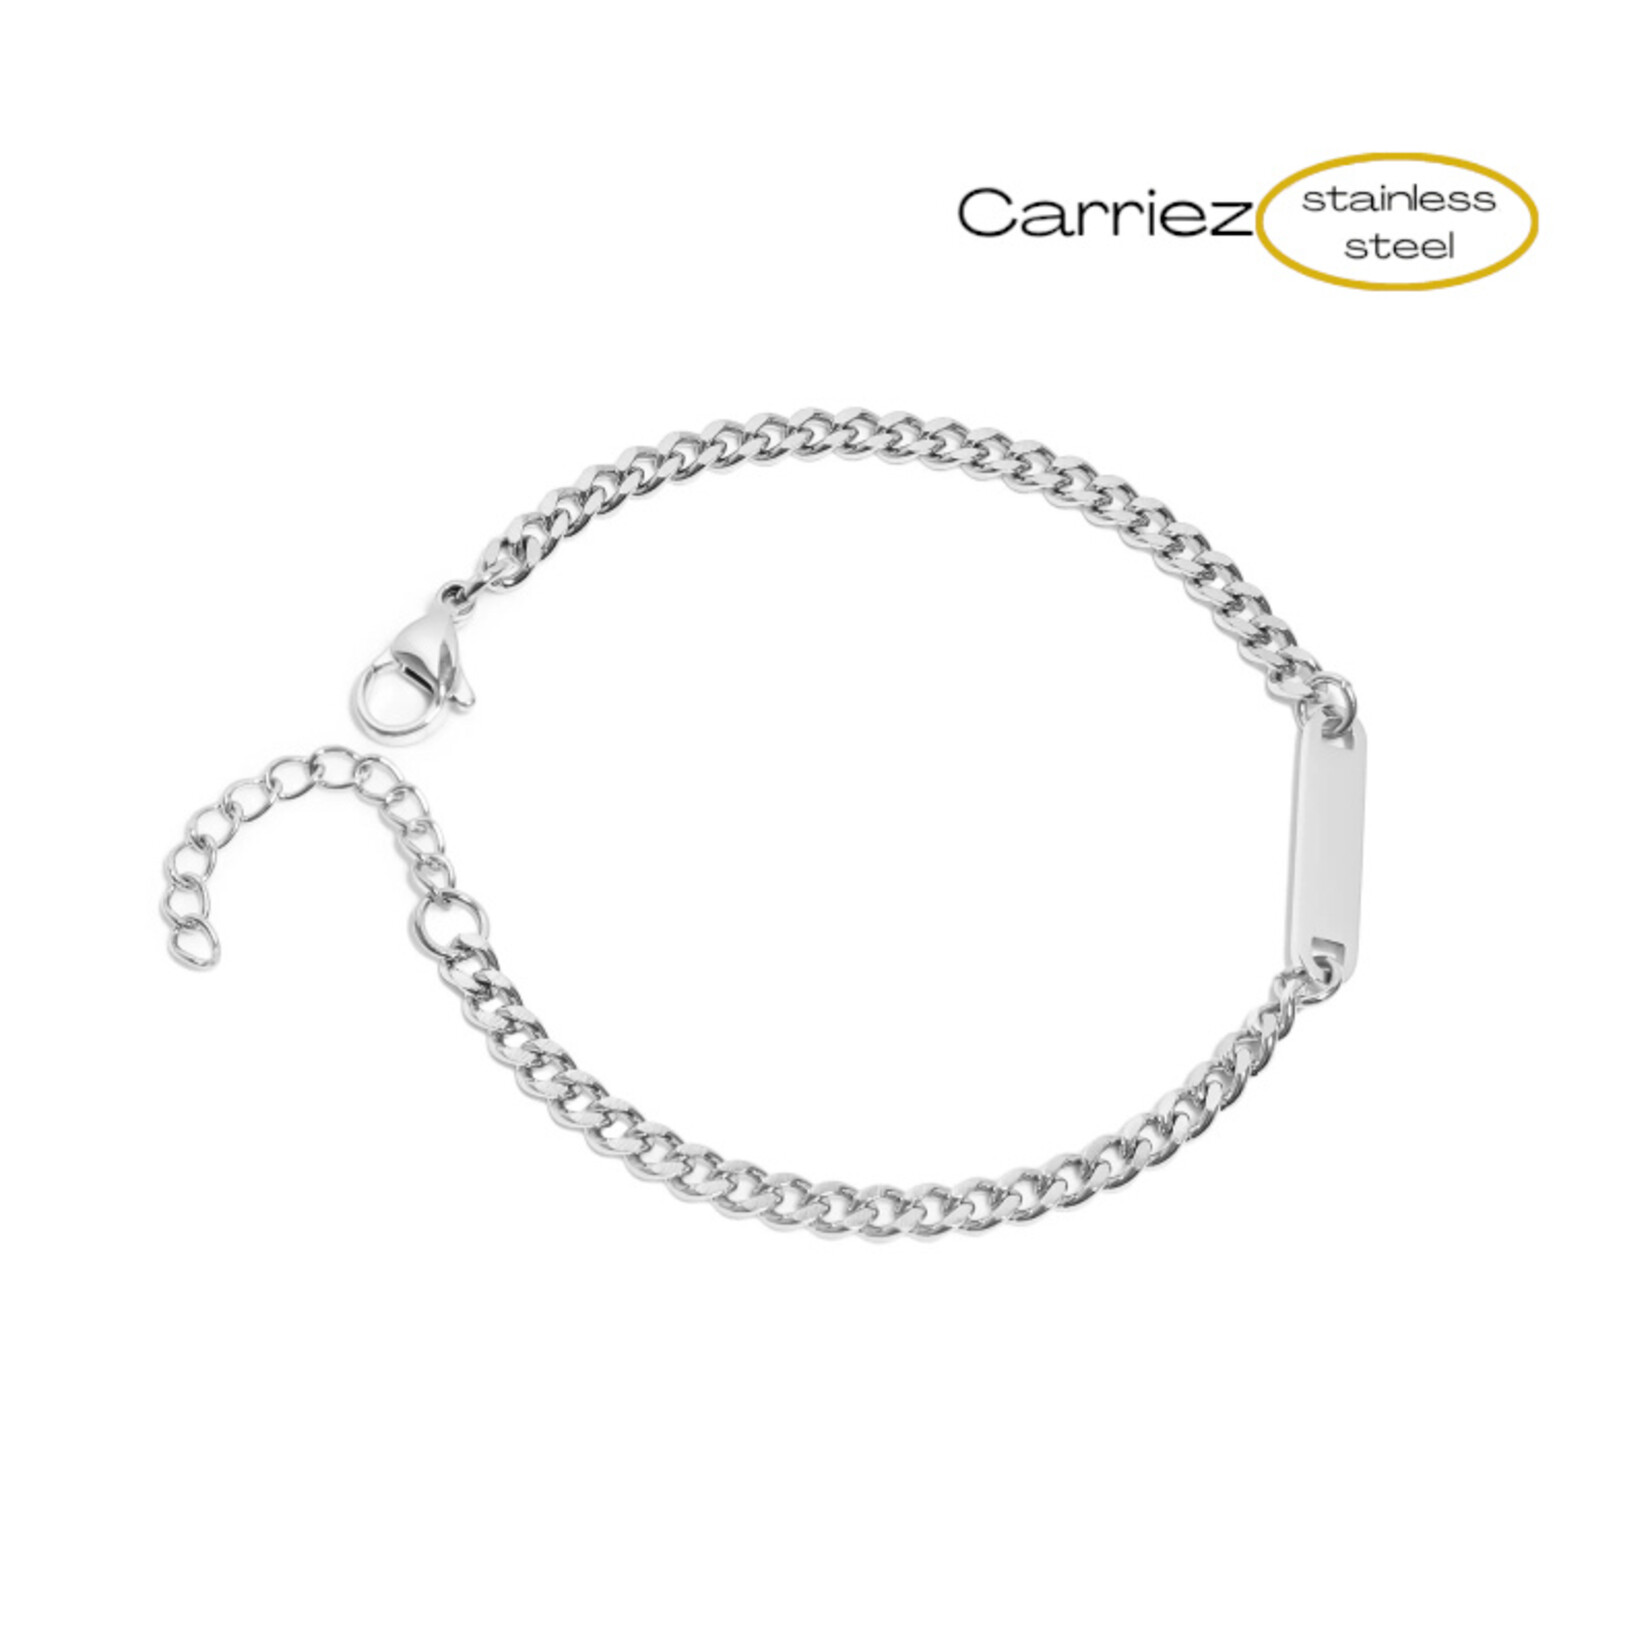 Carriez Gourmet naam armband zilver premium stainless steel